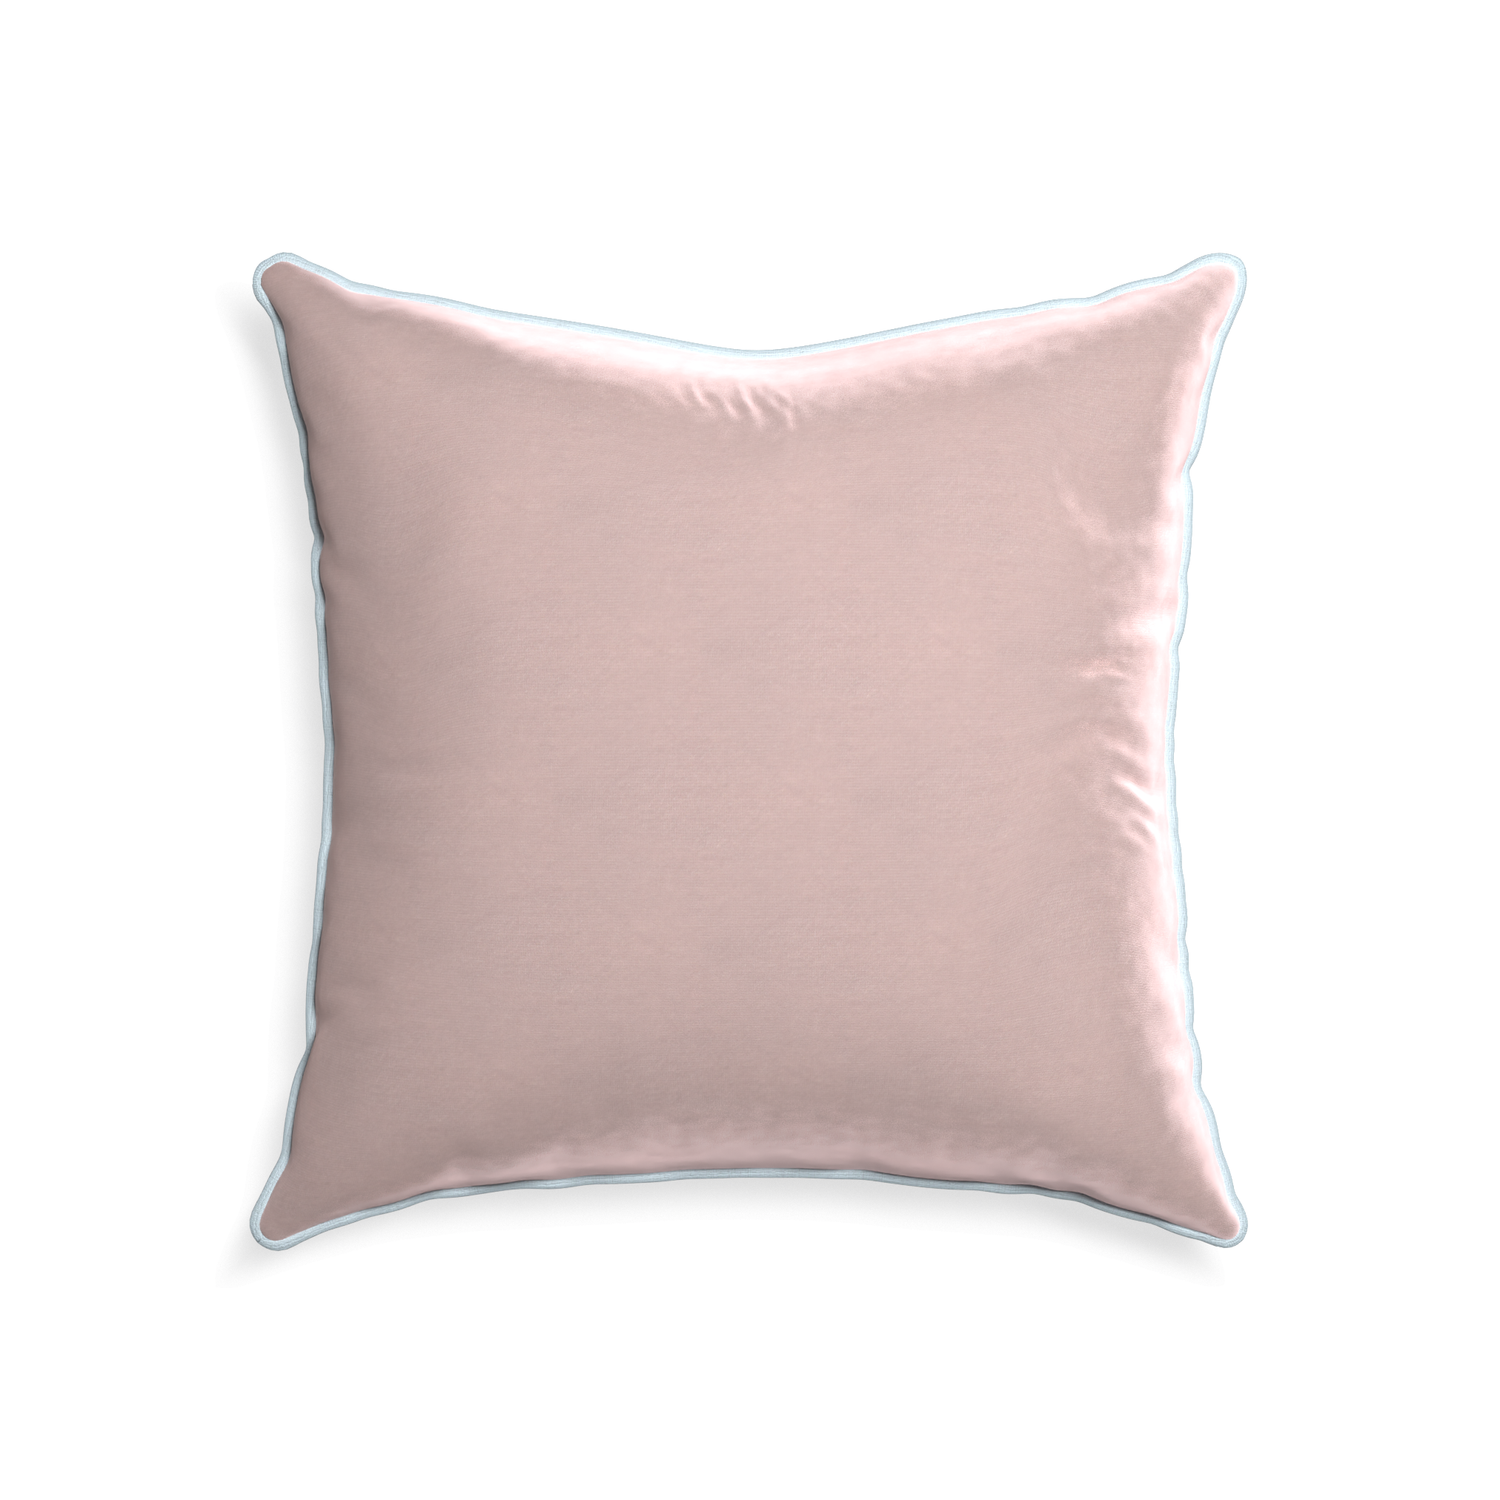 22-square rose velvet custom pillow with powder piping on white background